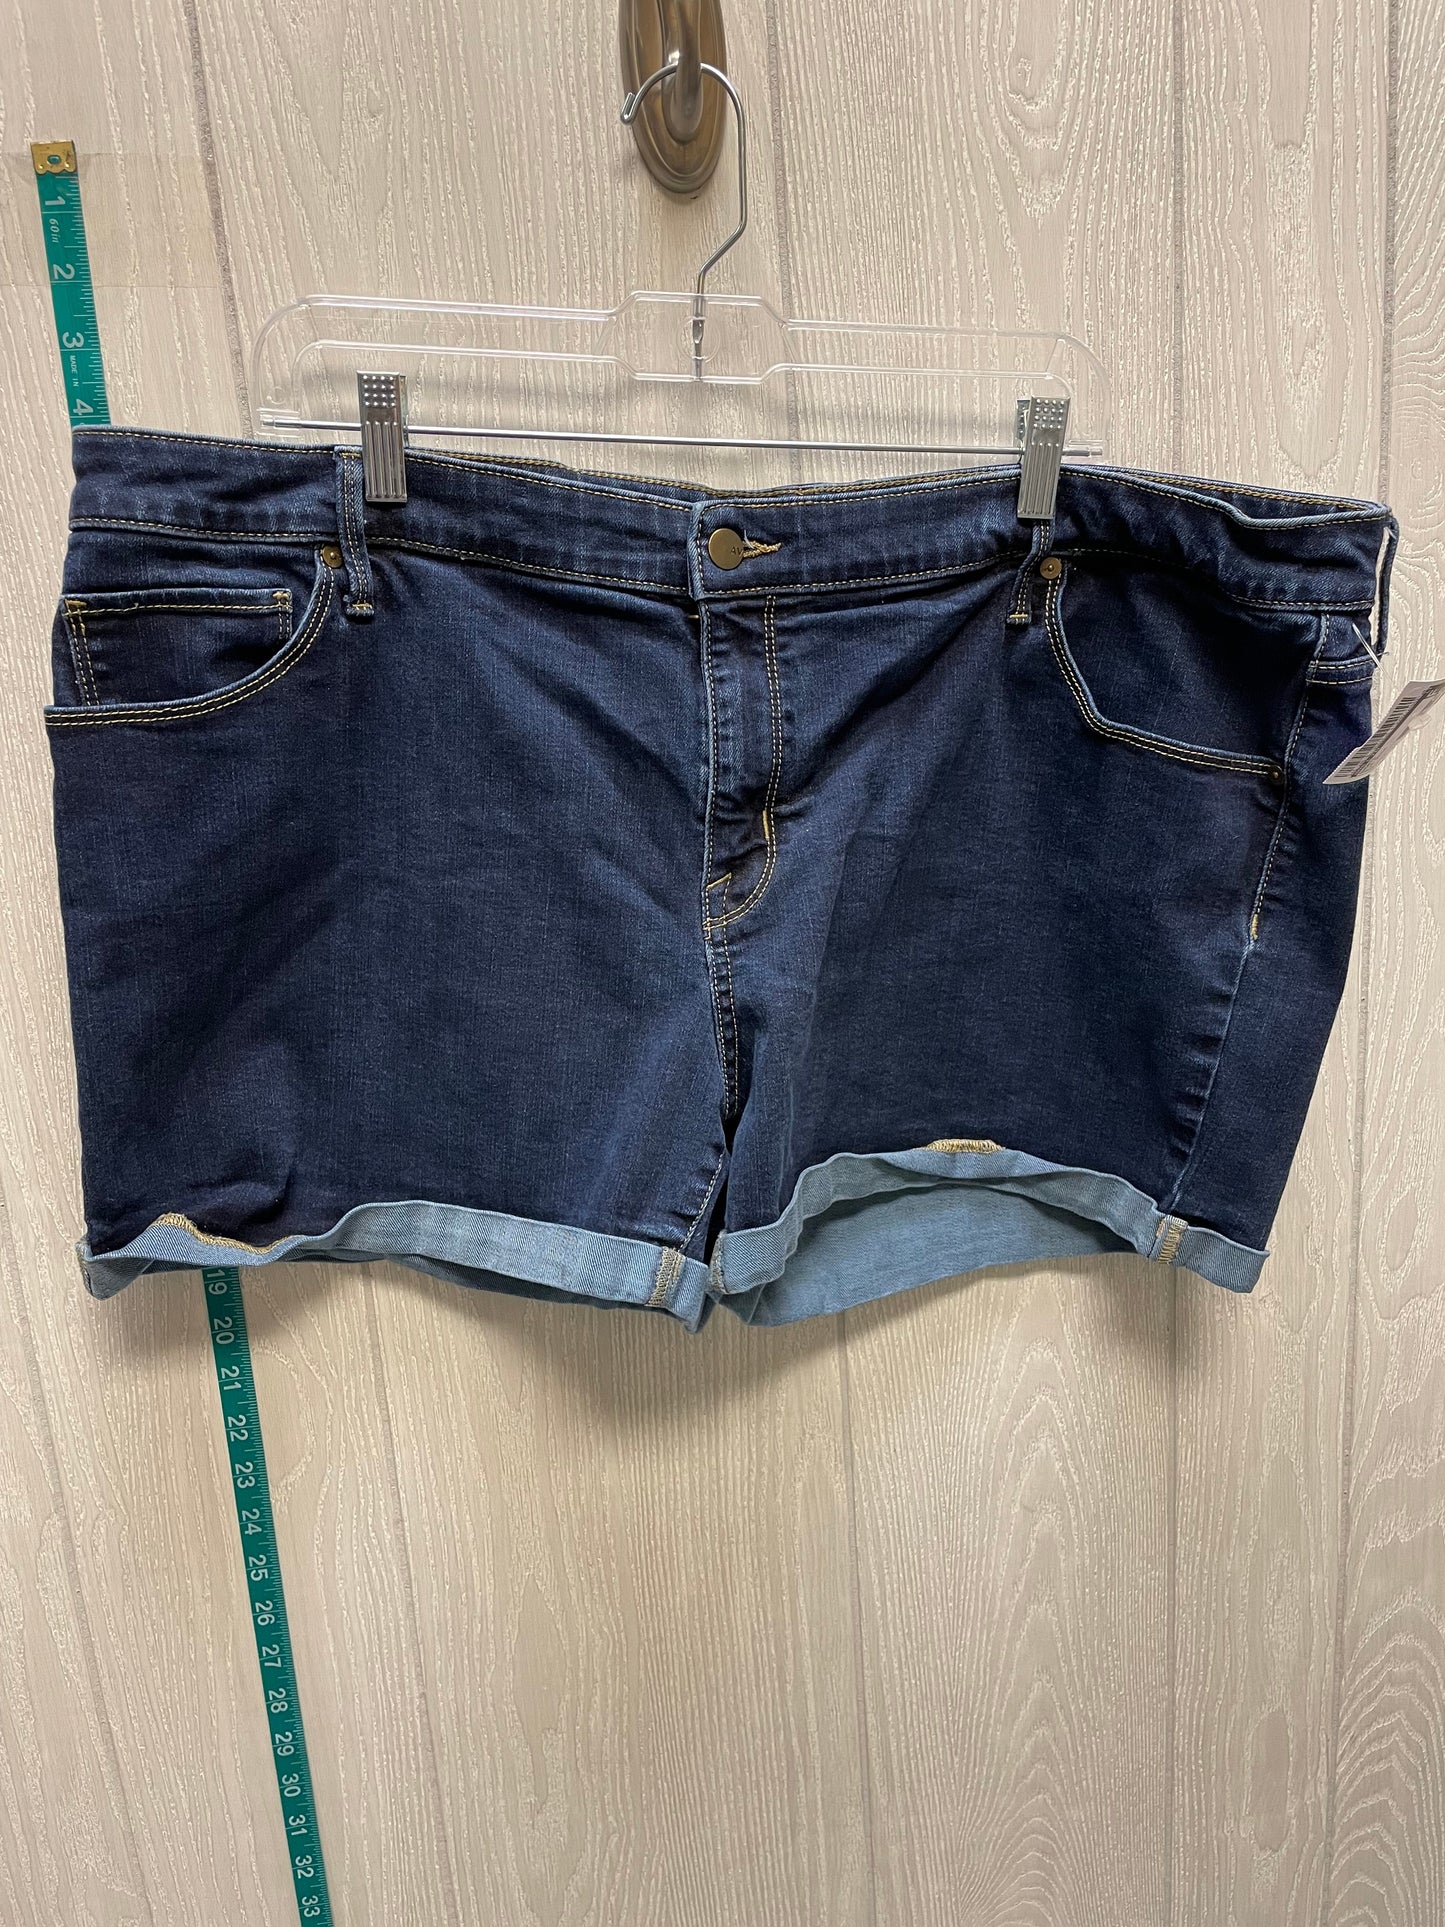 Blue Denim Shorts Ava & Viv, Size 24